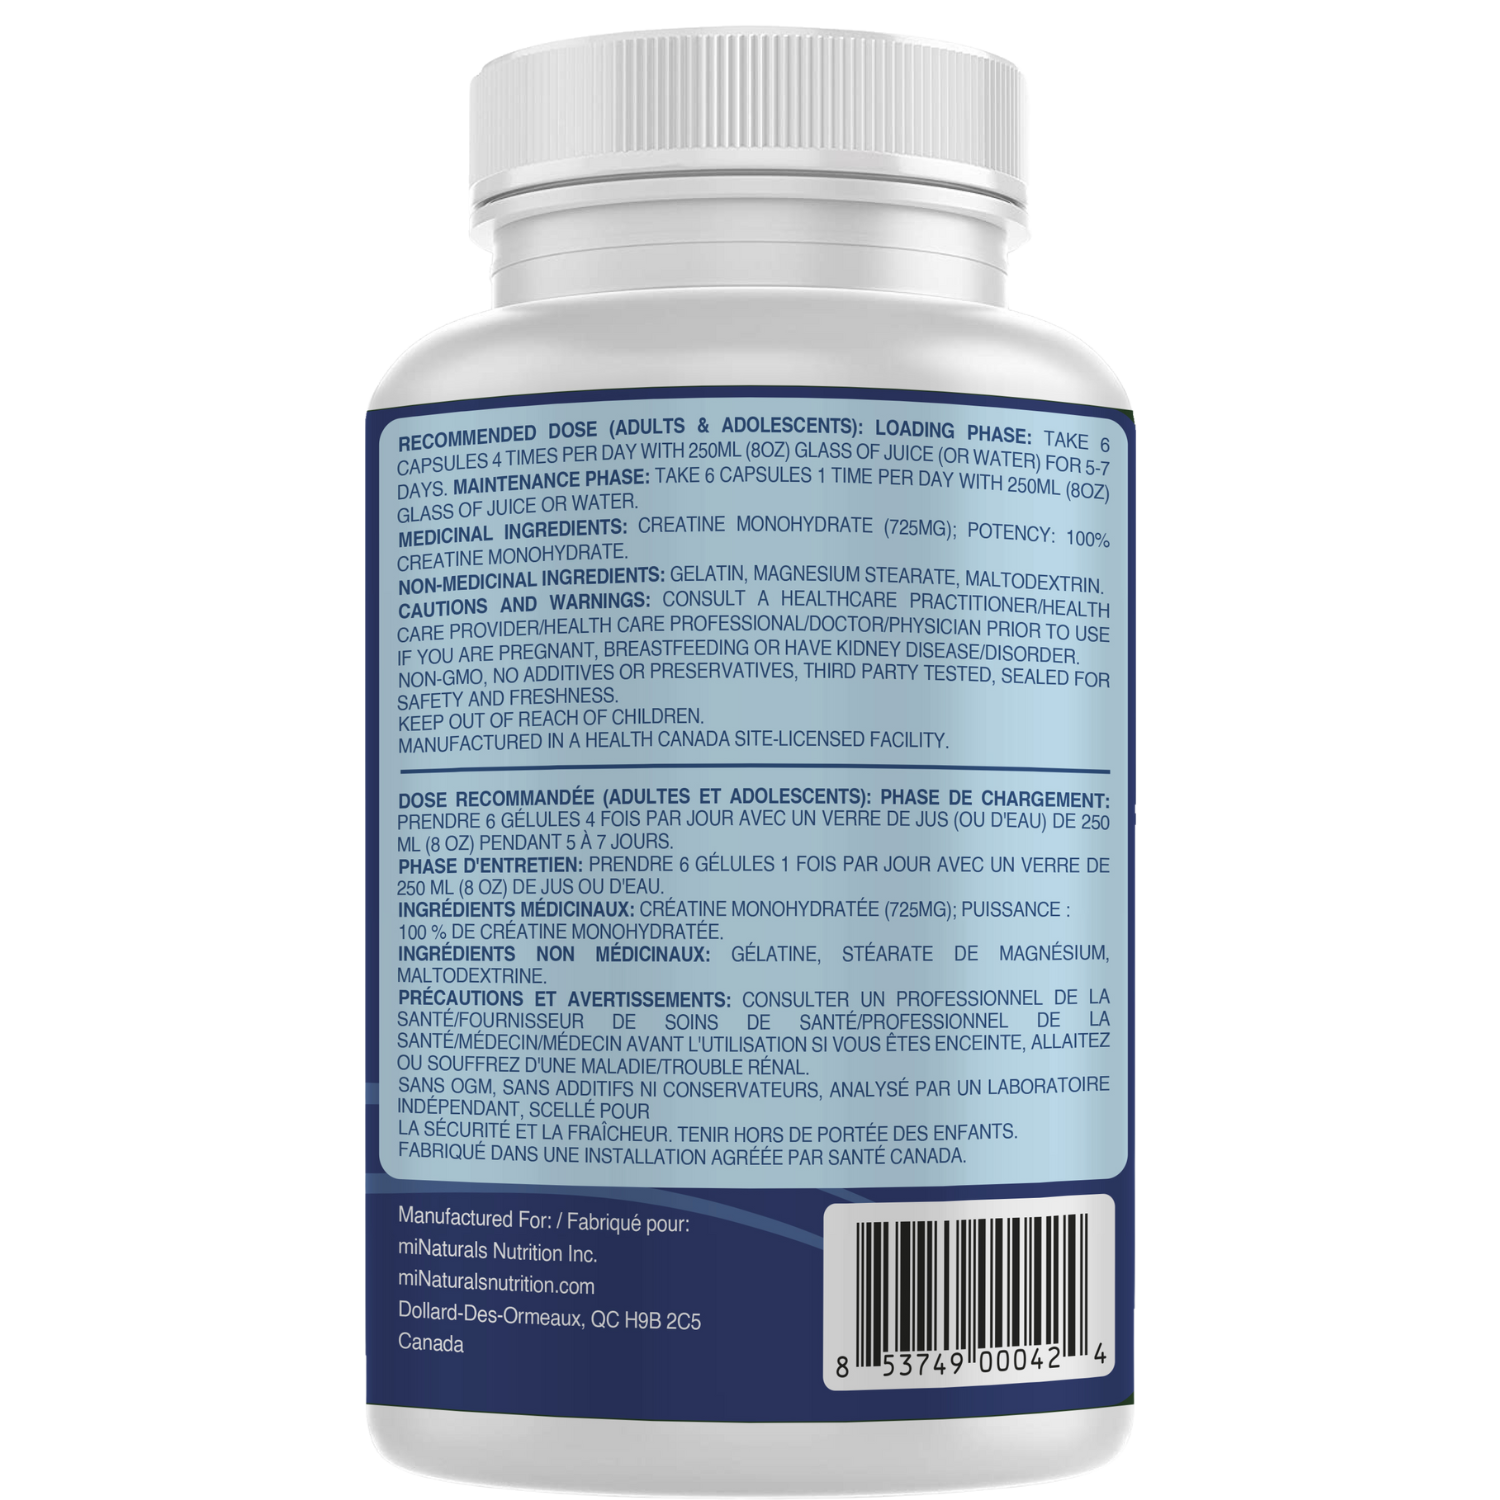 miNATURALS Capsules de monohydrate de créatine micronisée (300 capsules)